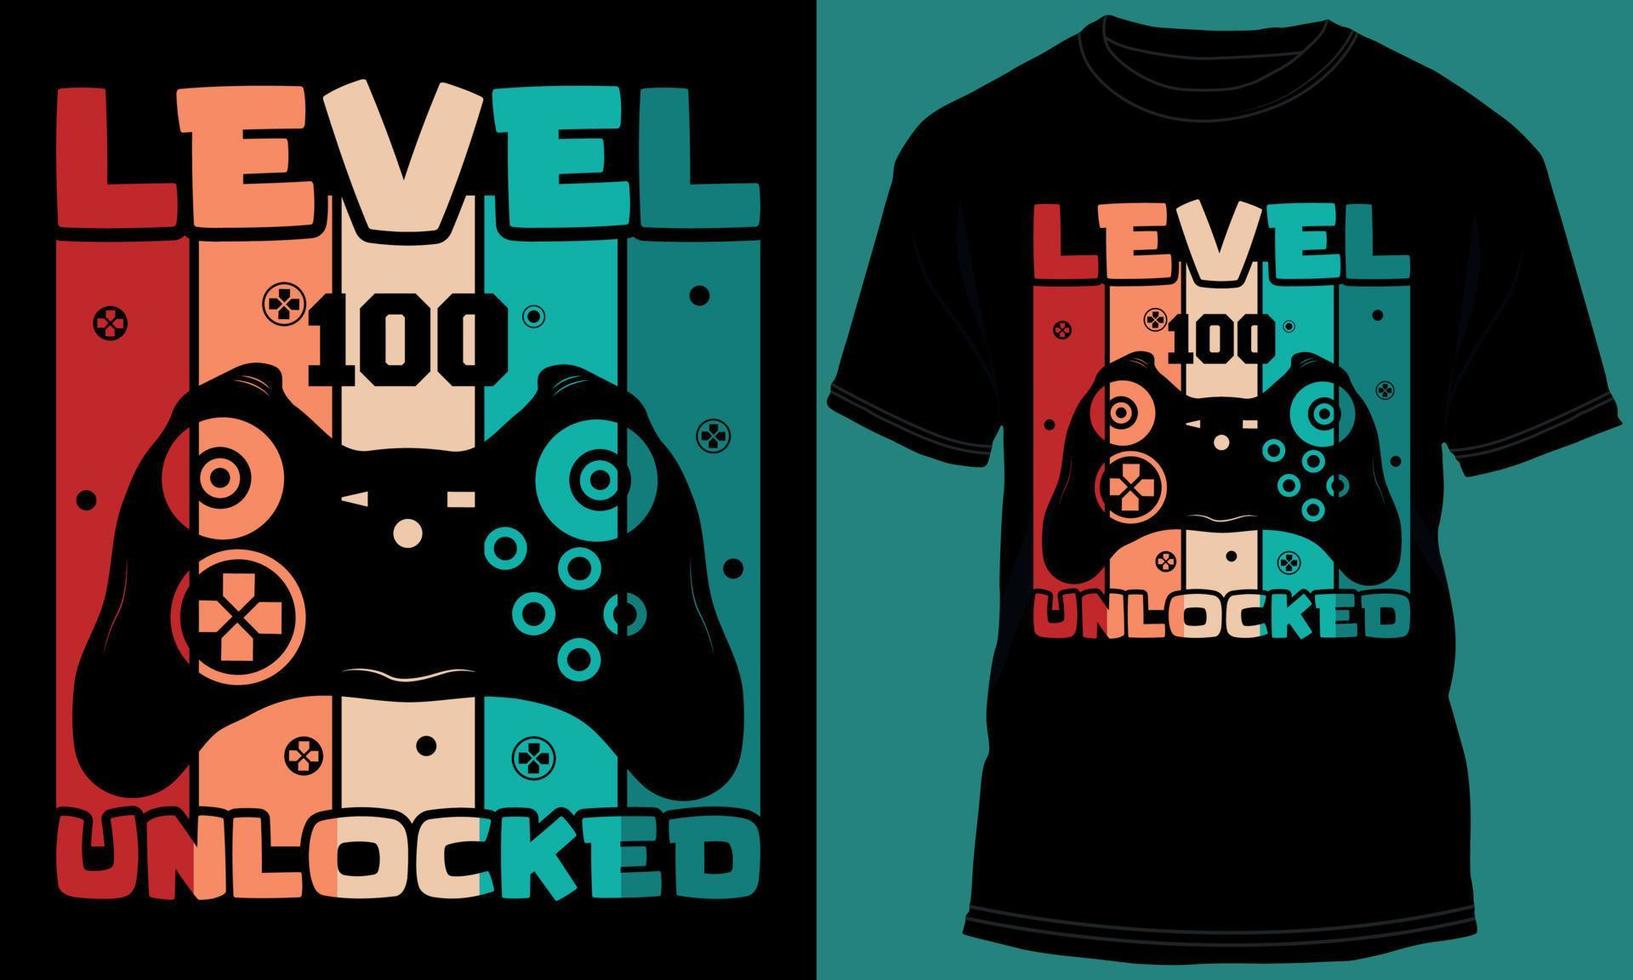 Spieler oder Spielen Niveau 100 freigeschaltet T-Shirt Design vektor